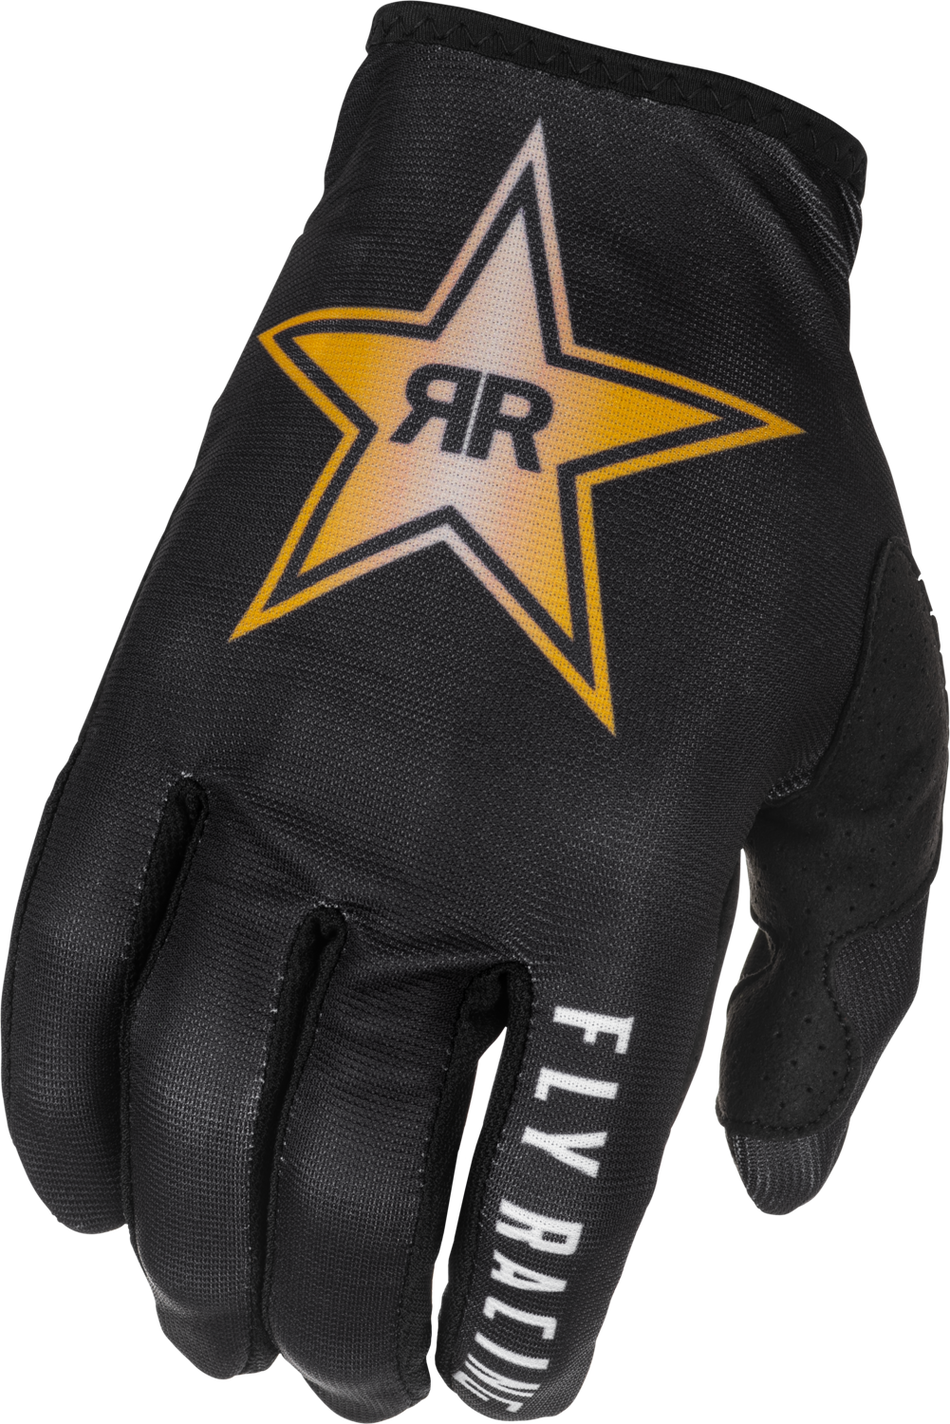 FLY RACING Lite Rockstar Gloves Black/Gold Lg 374-013L